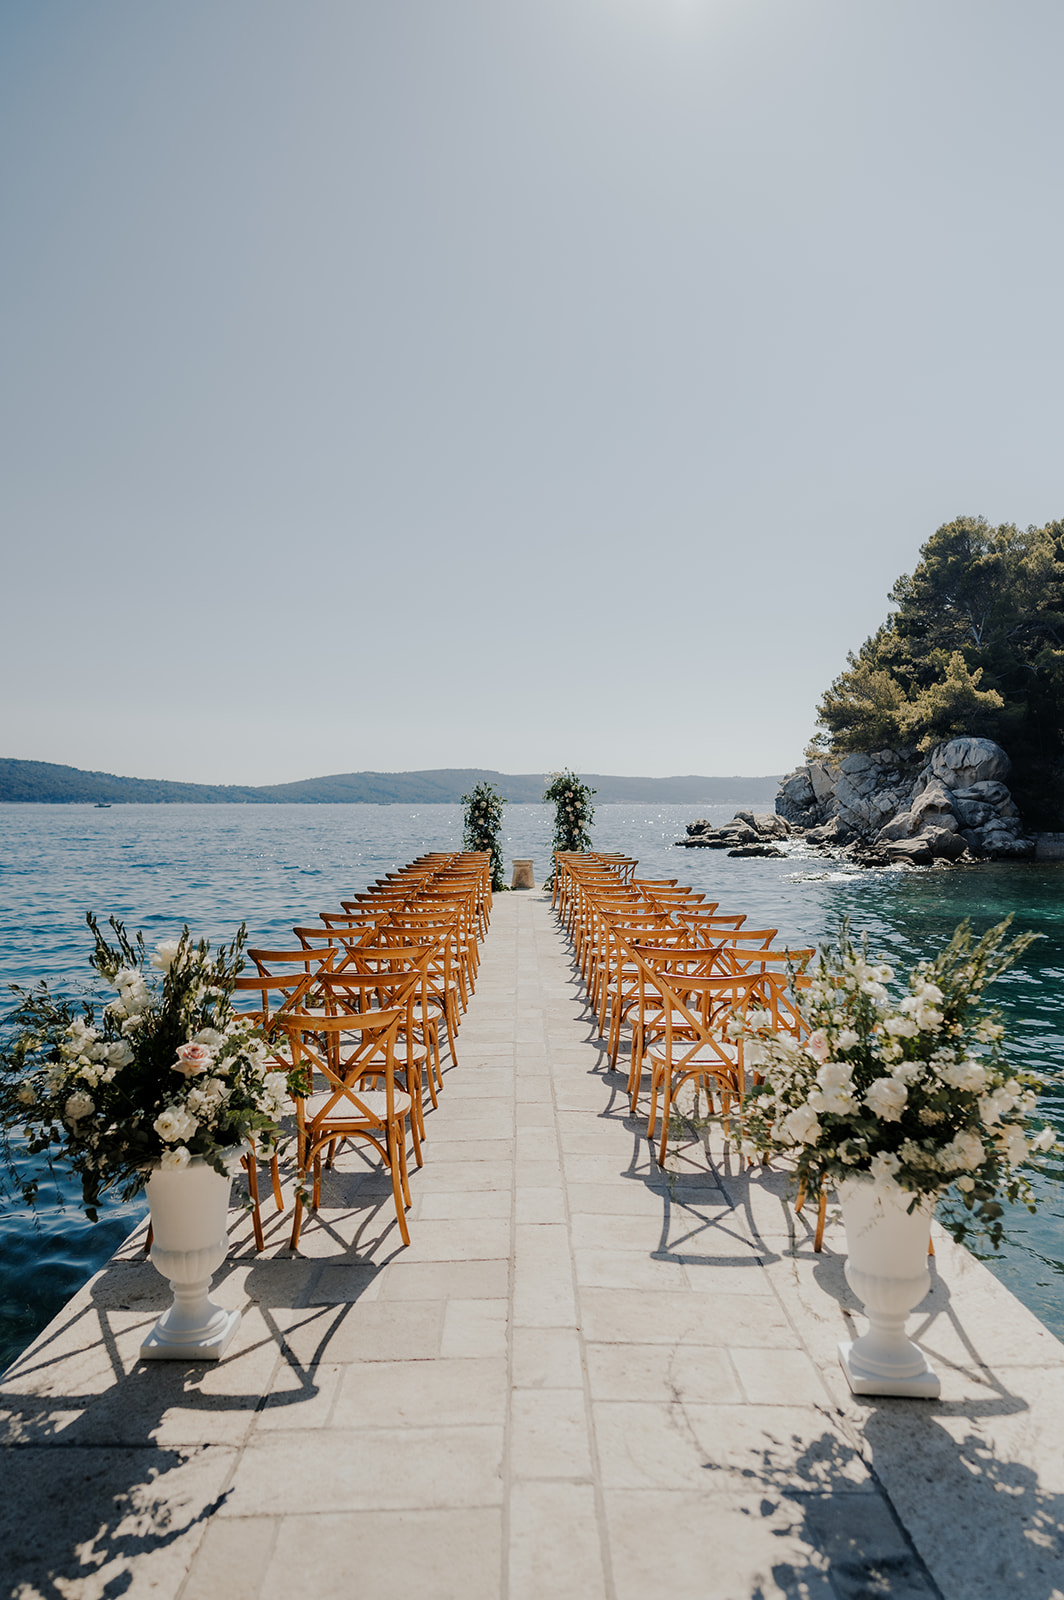 Destination wedding
Destination wedding in Split
Destination wedding photographer
Wedding by the sea
Villa Dalmatia